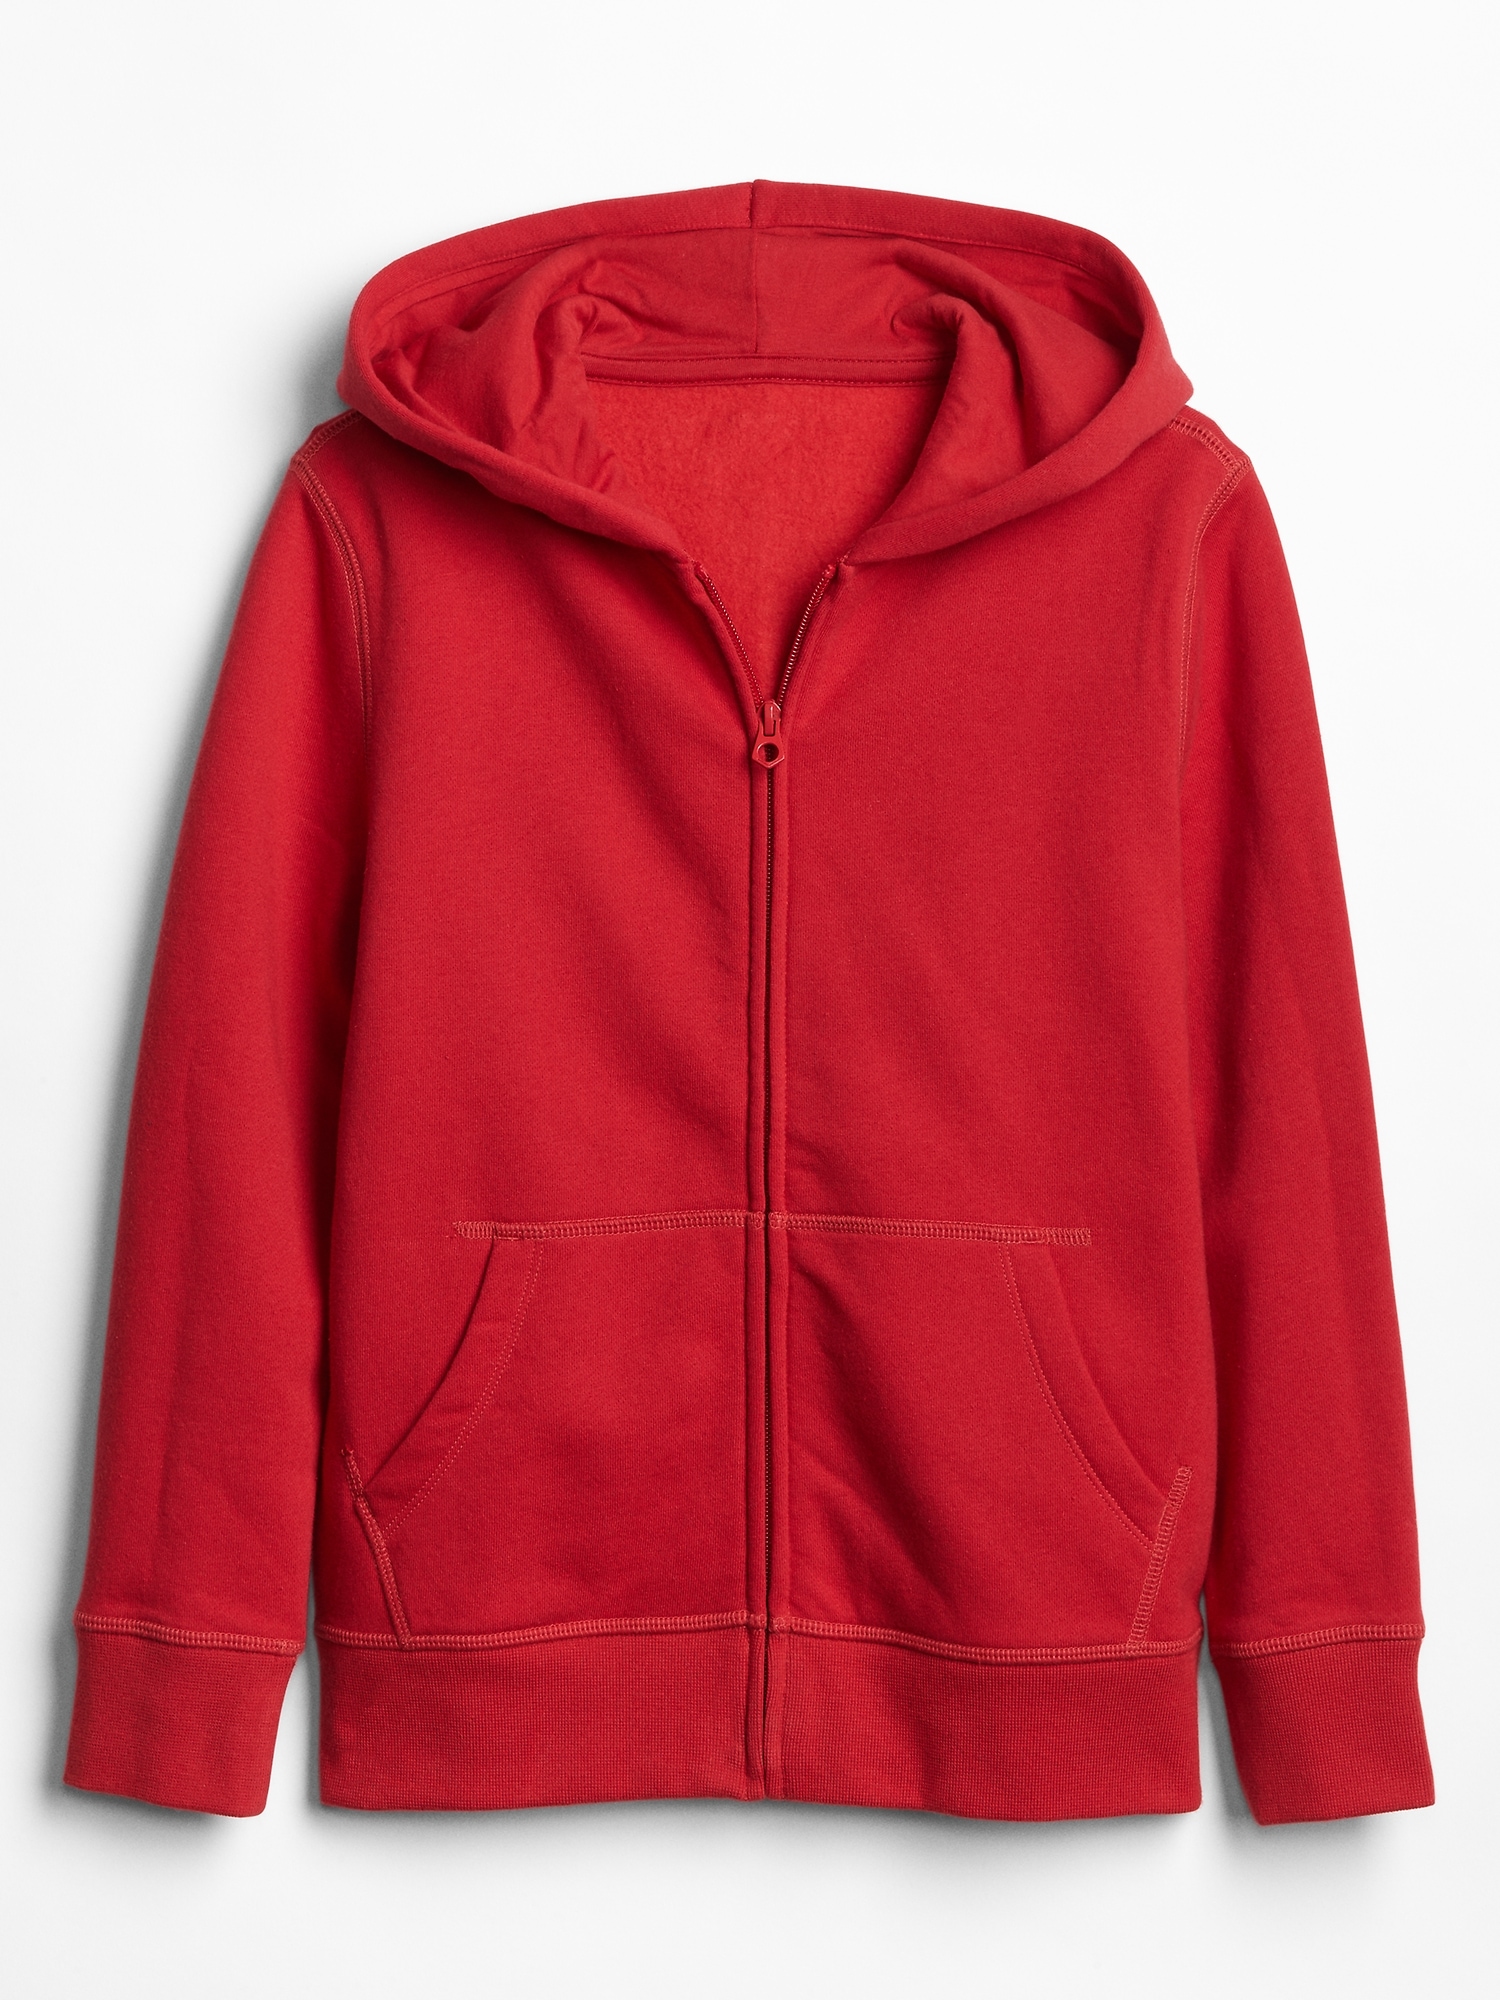 Gap Factory Zip Hoodie Modern Red Size XL